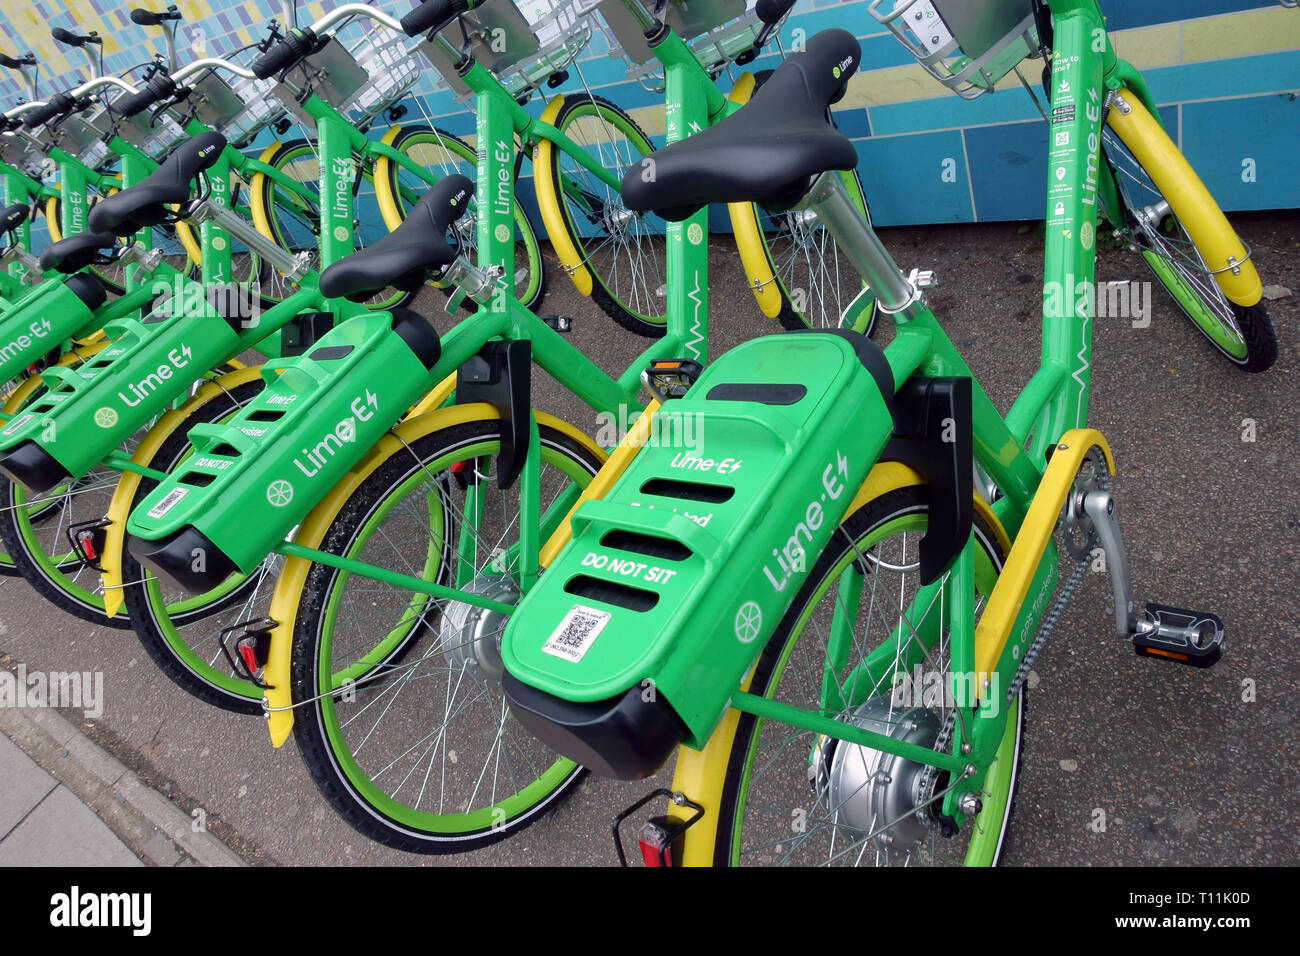 Lime E battery assisted rental bikes, London Stock Photo